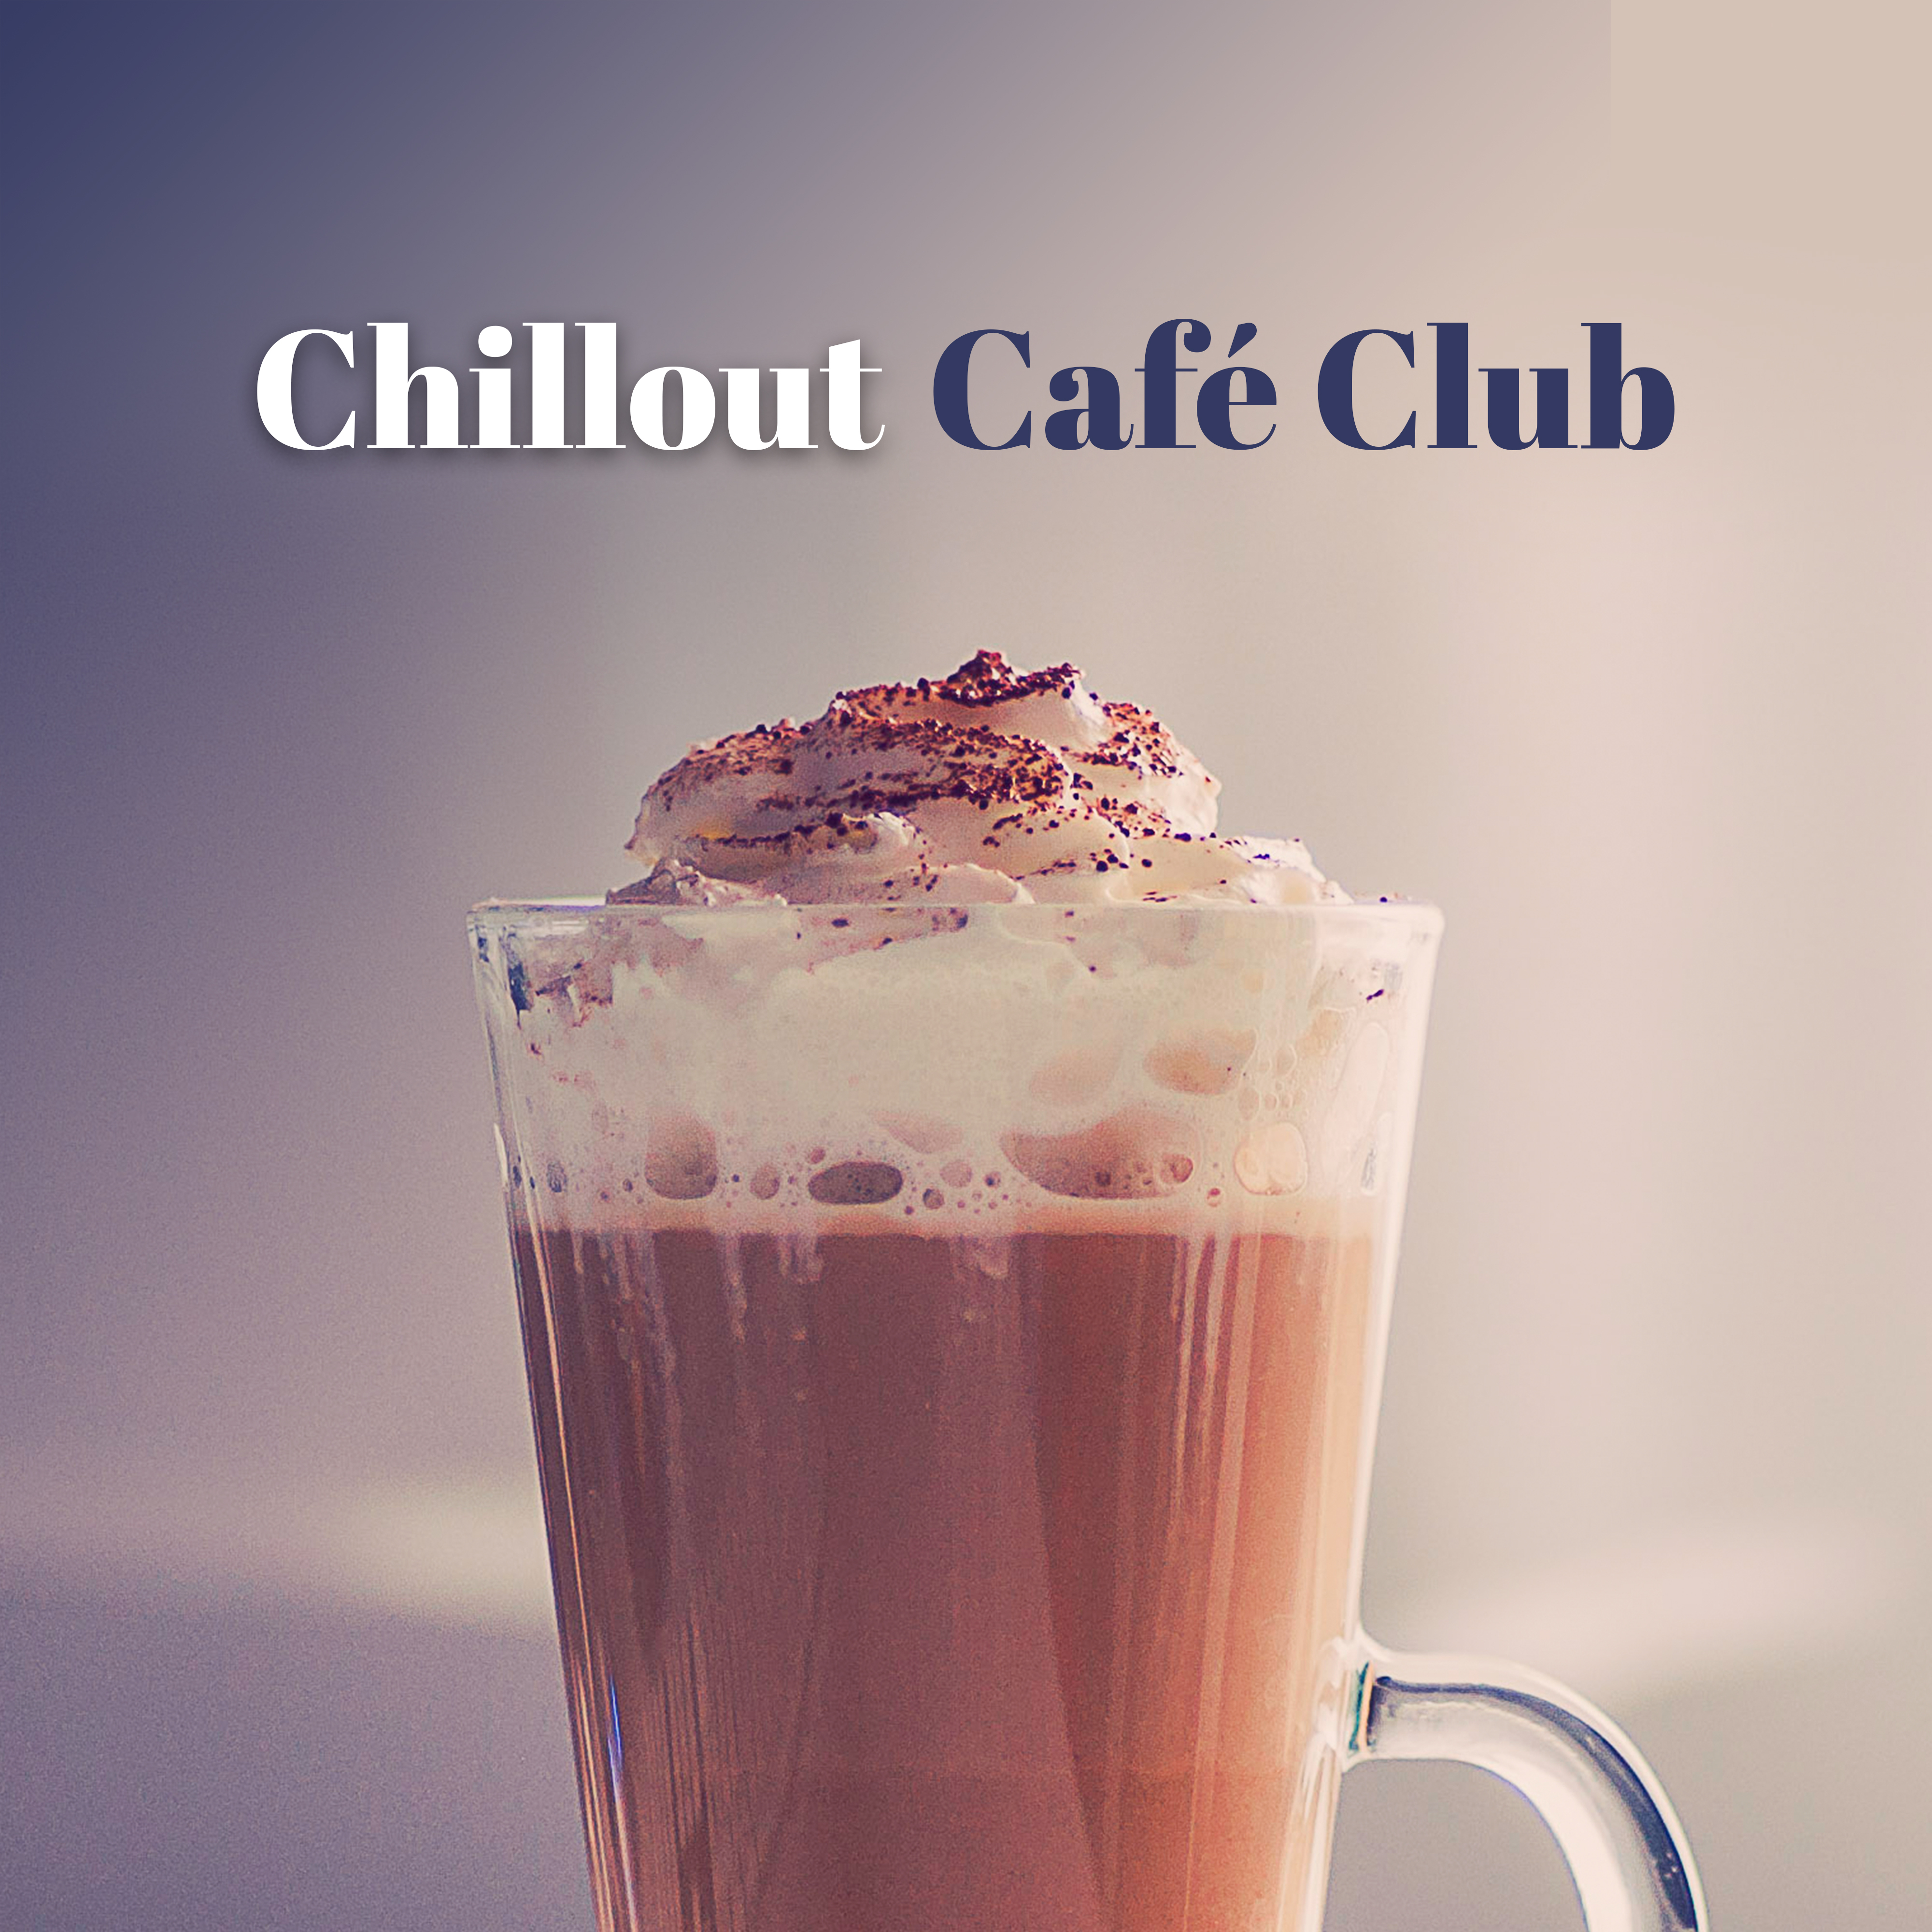 Chillout Café Club - Café Music, Chill Out 2017, Music for Café, Club, Relax